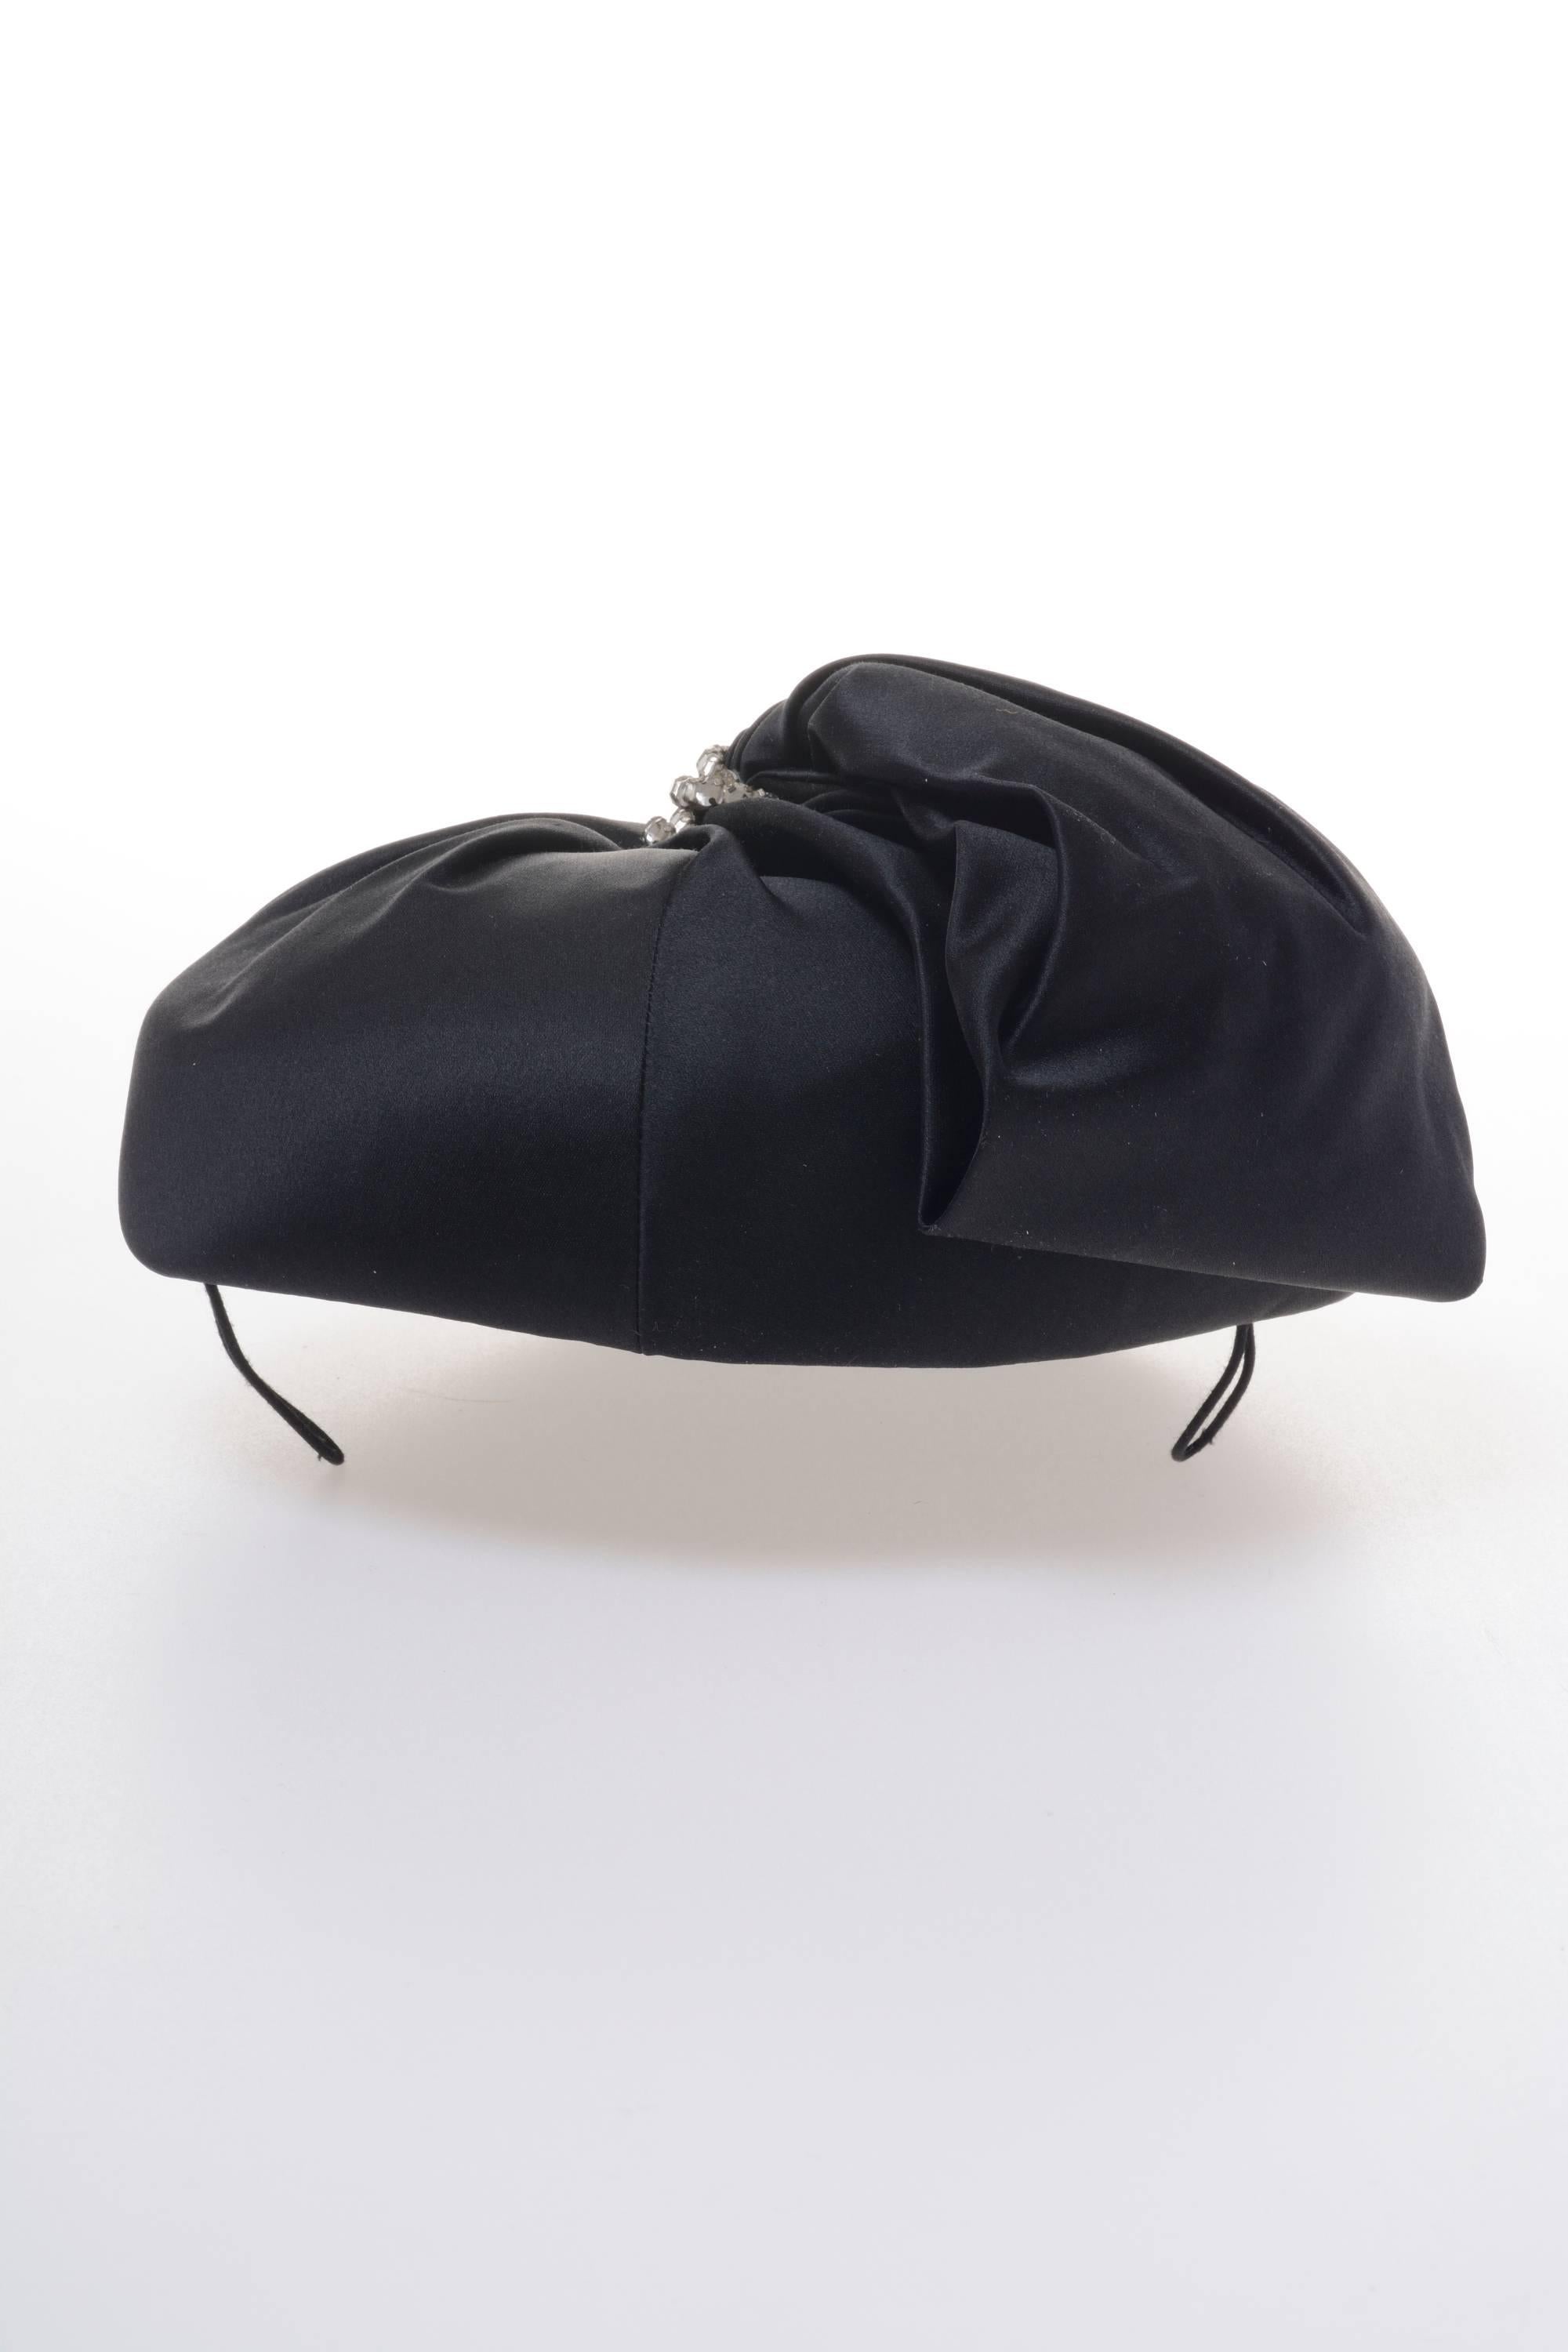 Women's 1960s GALLIA PETER Black Pillbox Fascinator Hat For Sale